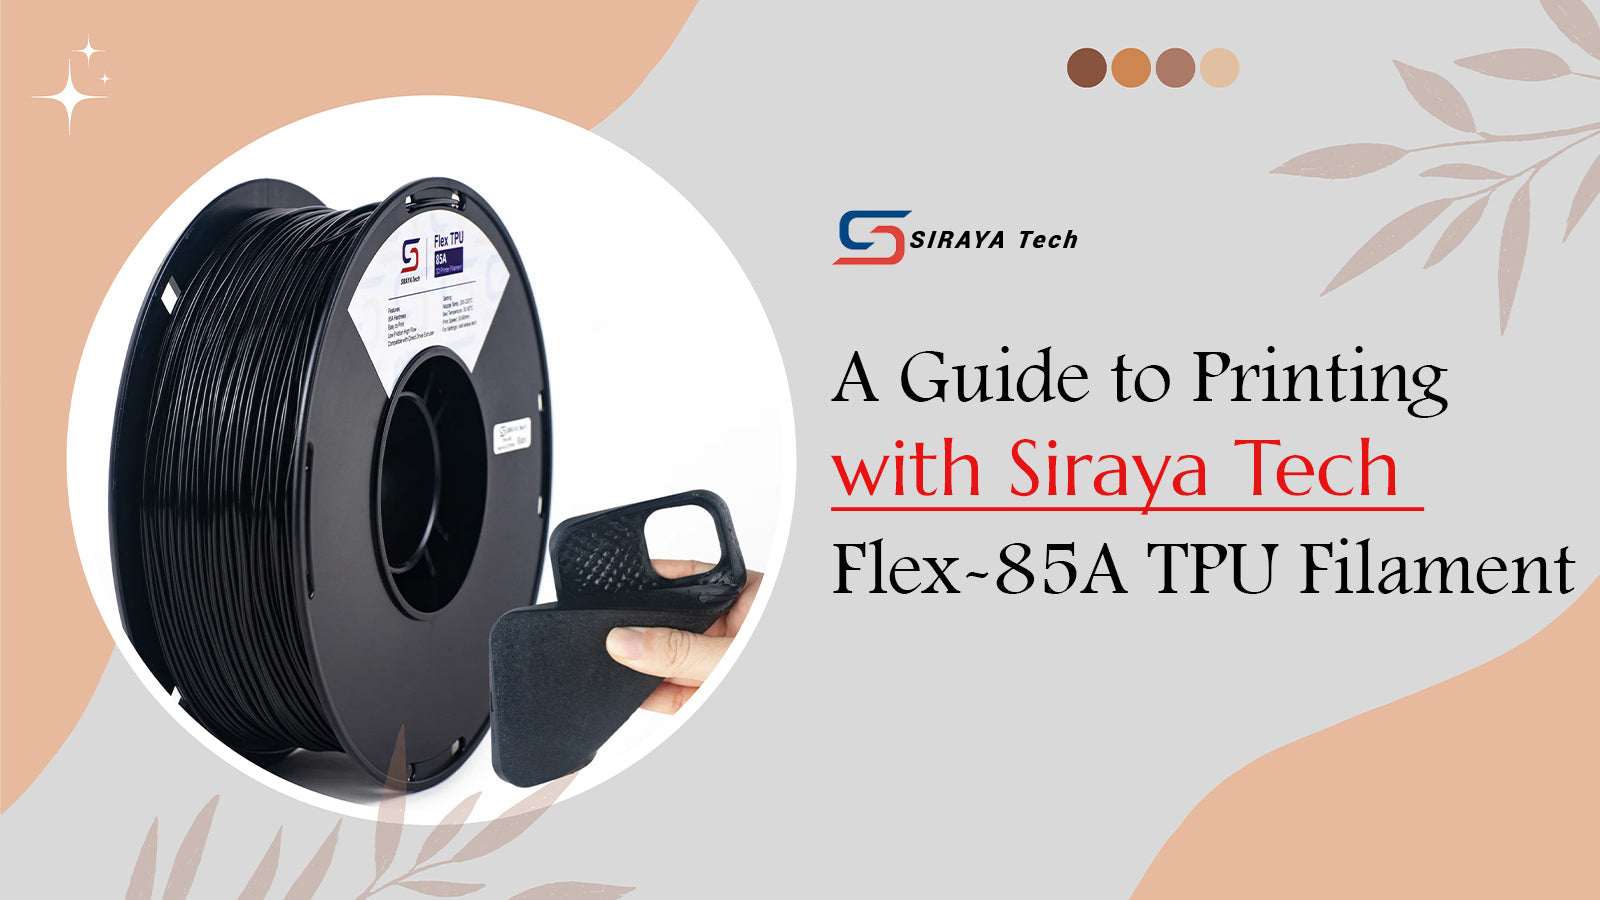 A Guide to Printing with Siraya Tech Flex-85A TPU Filament